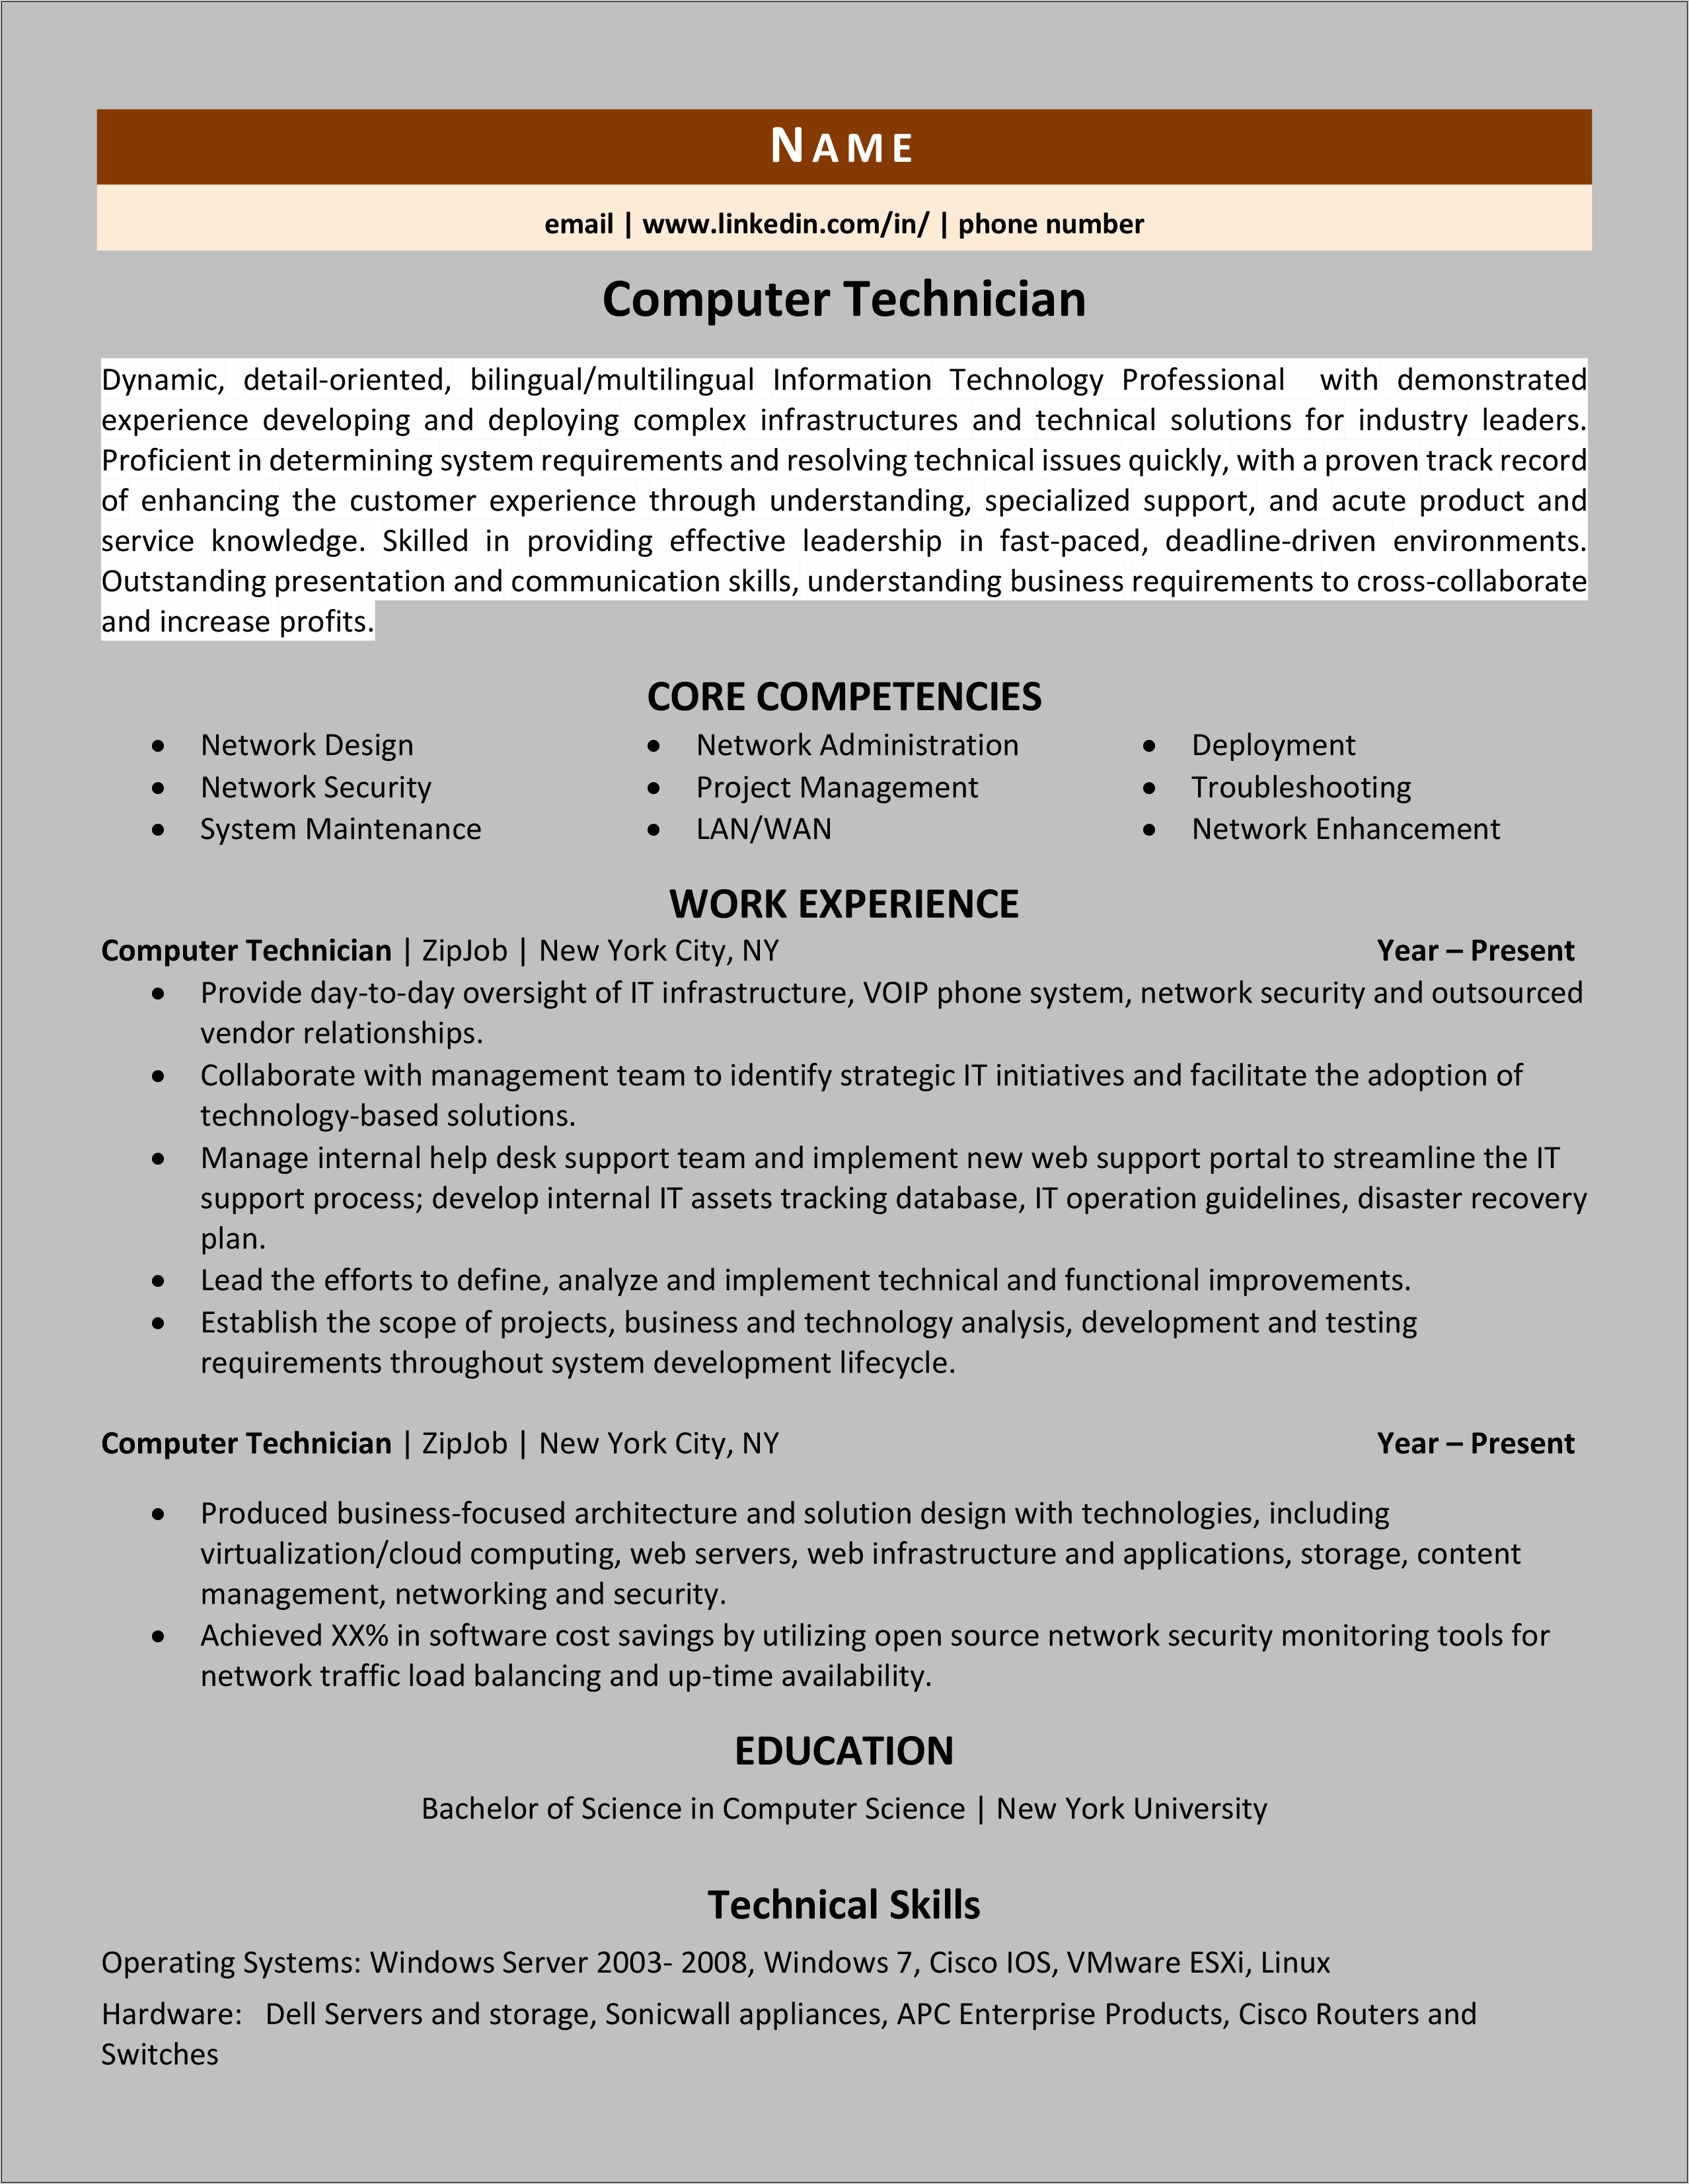 Resume For Computer Technician Job